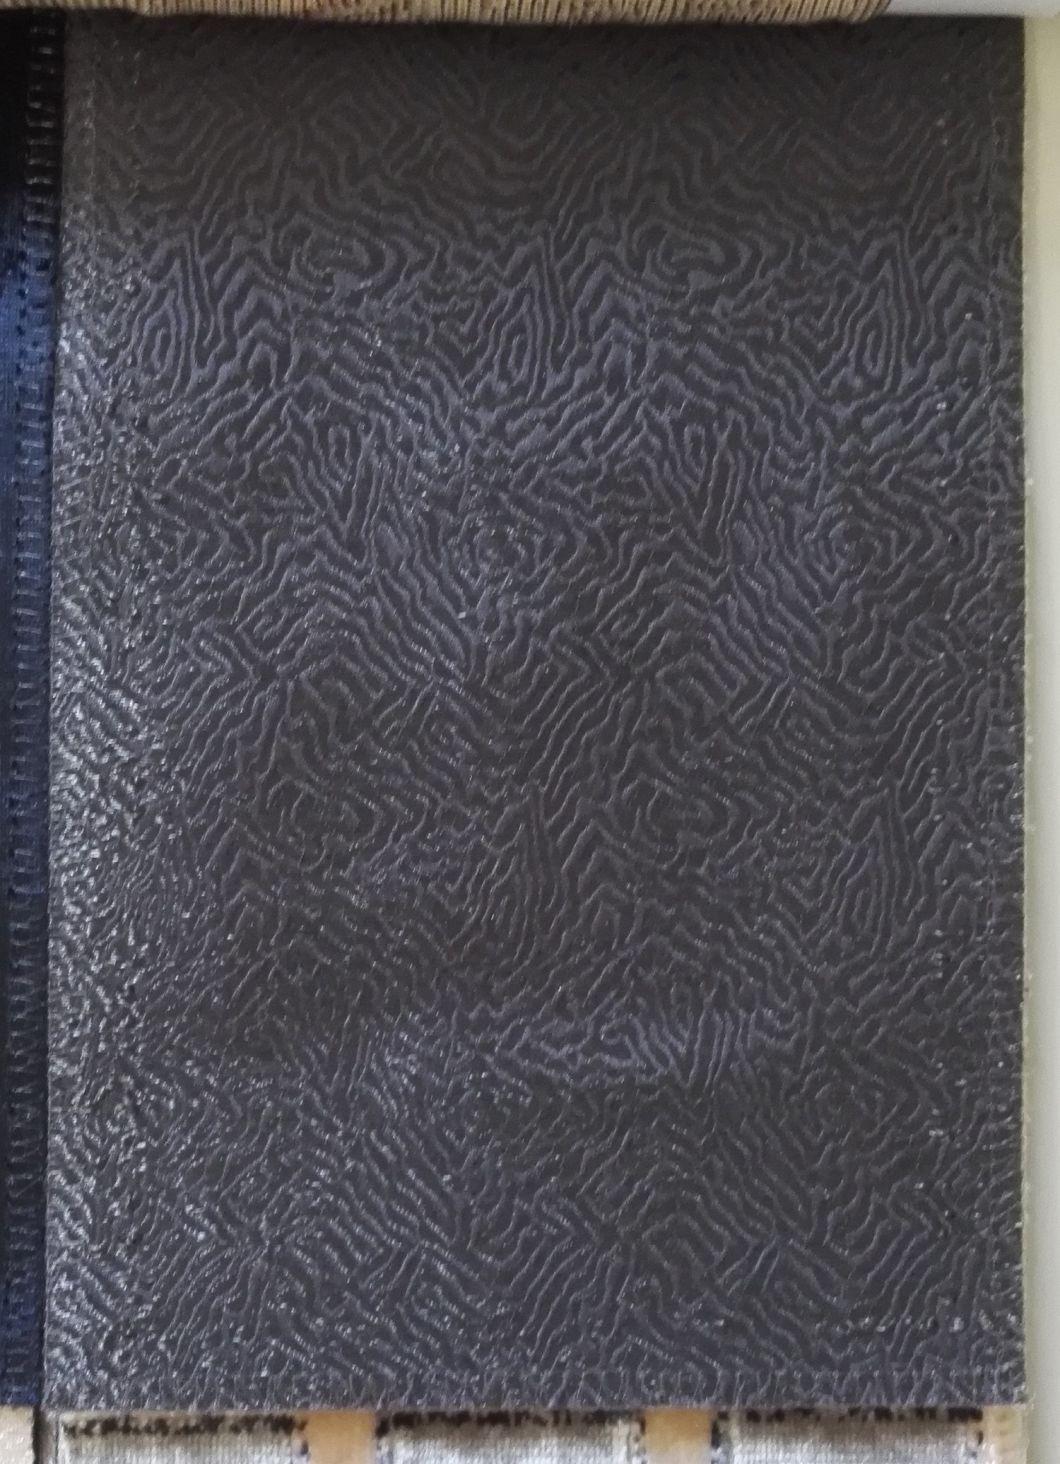 Hotel Textiles 100% Polyester Cut Velvet Terciopelo Upholstery Cushion Almohada Fabric